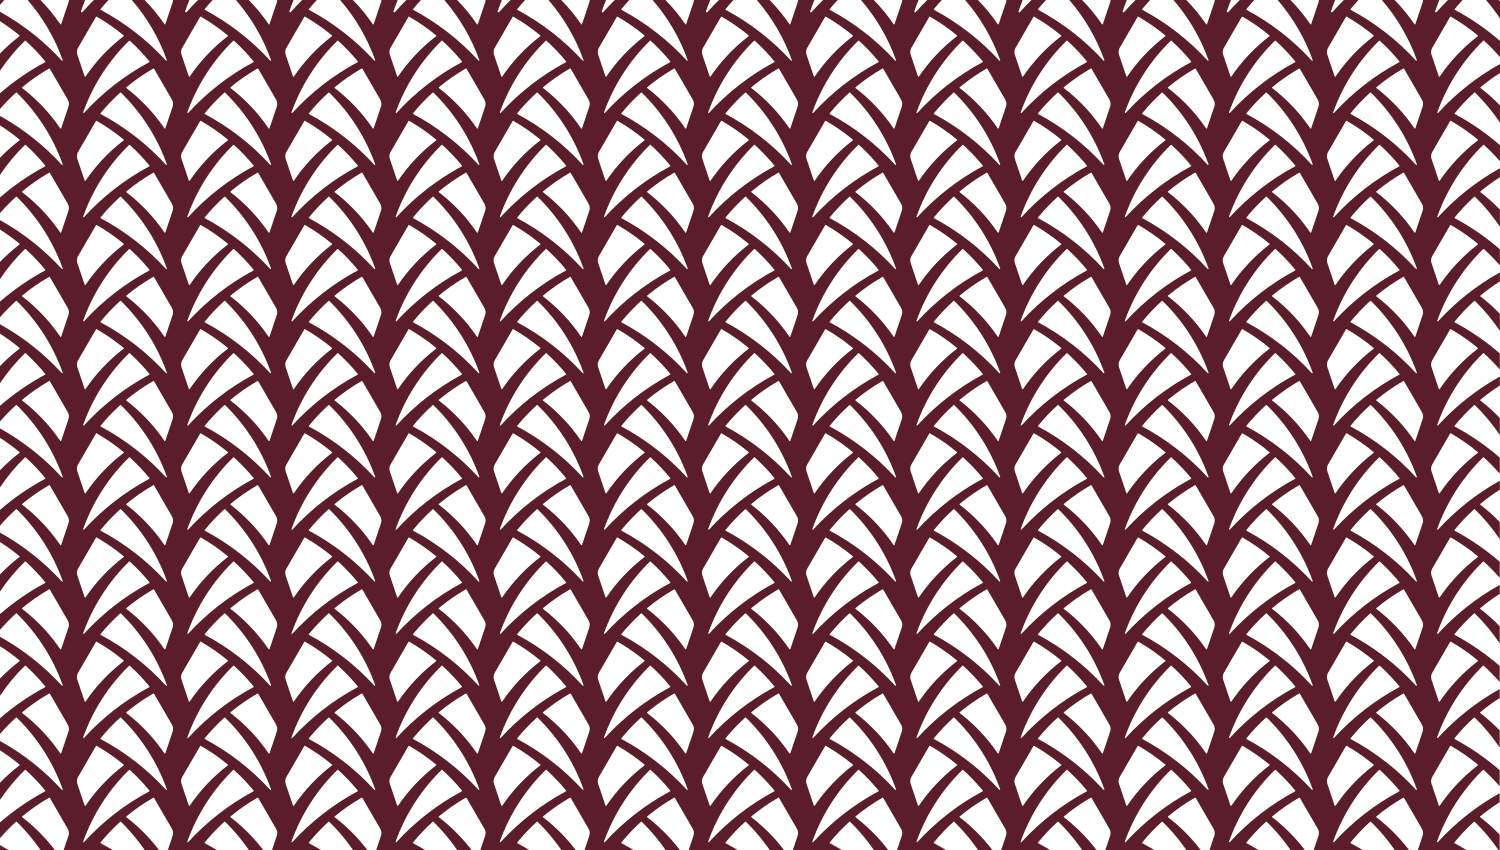 Parasoleil™ Bluestem© pattern displayed with a burgundy color overlay